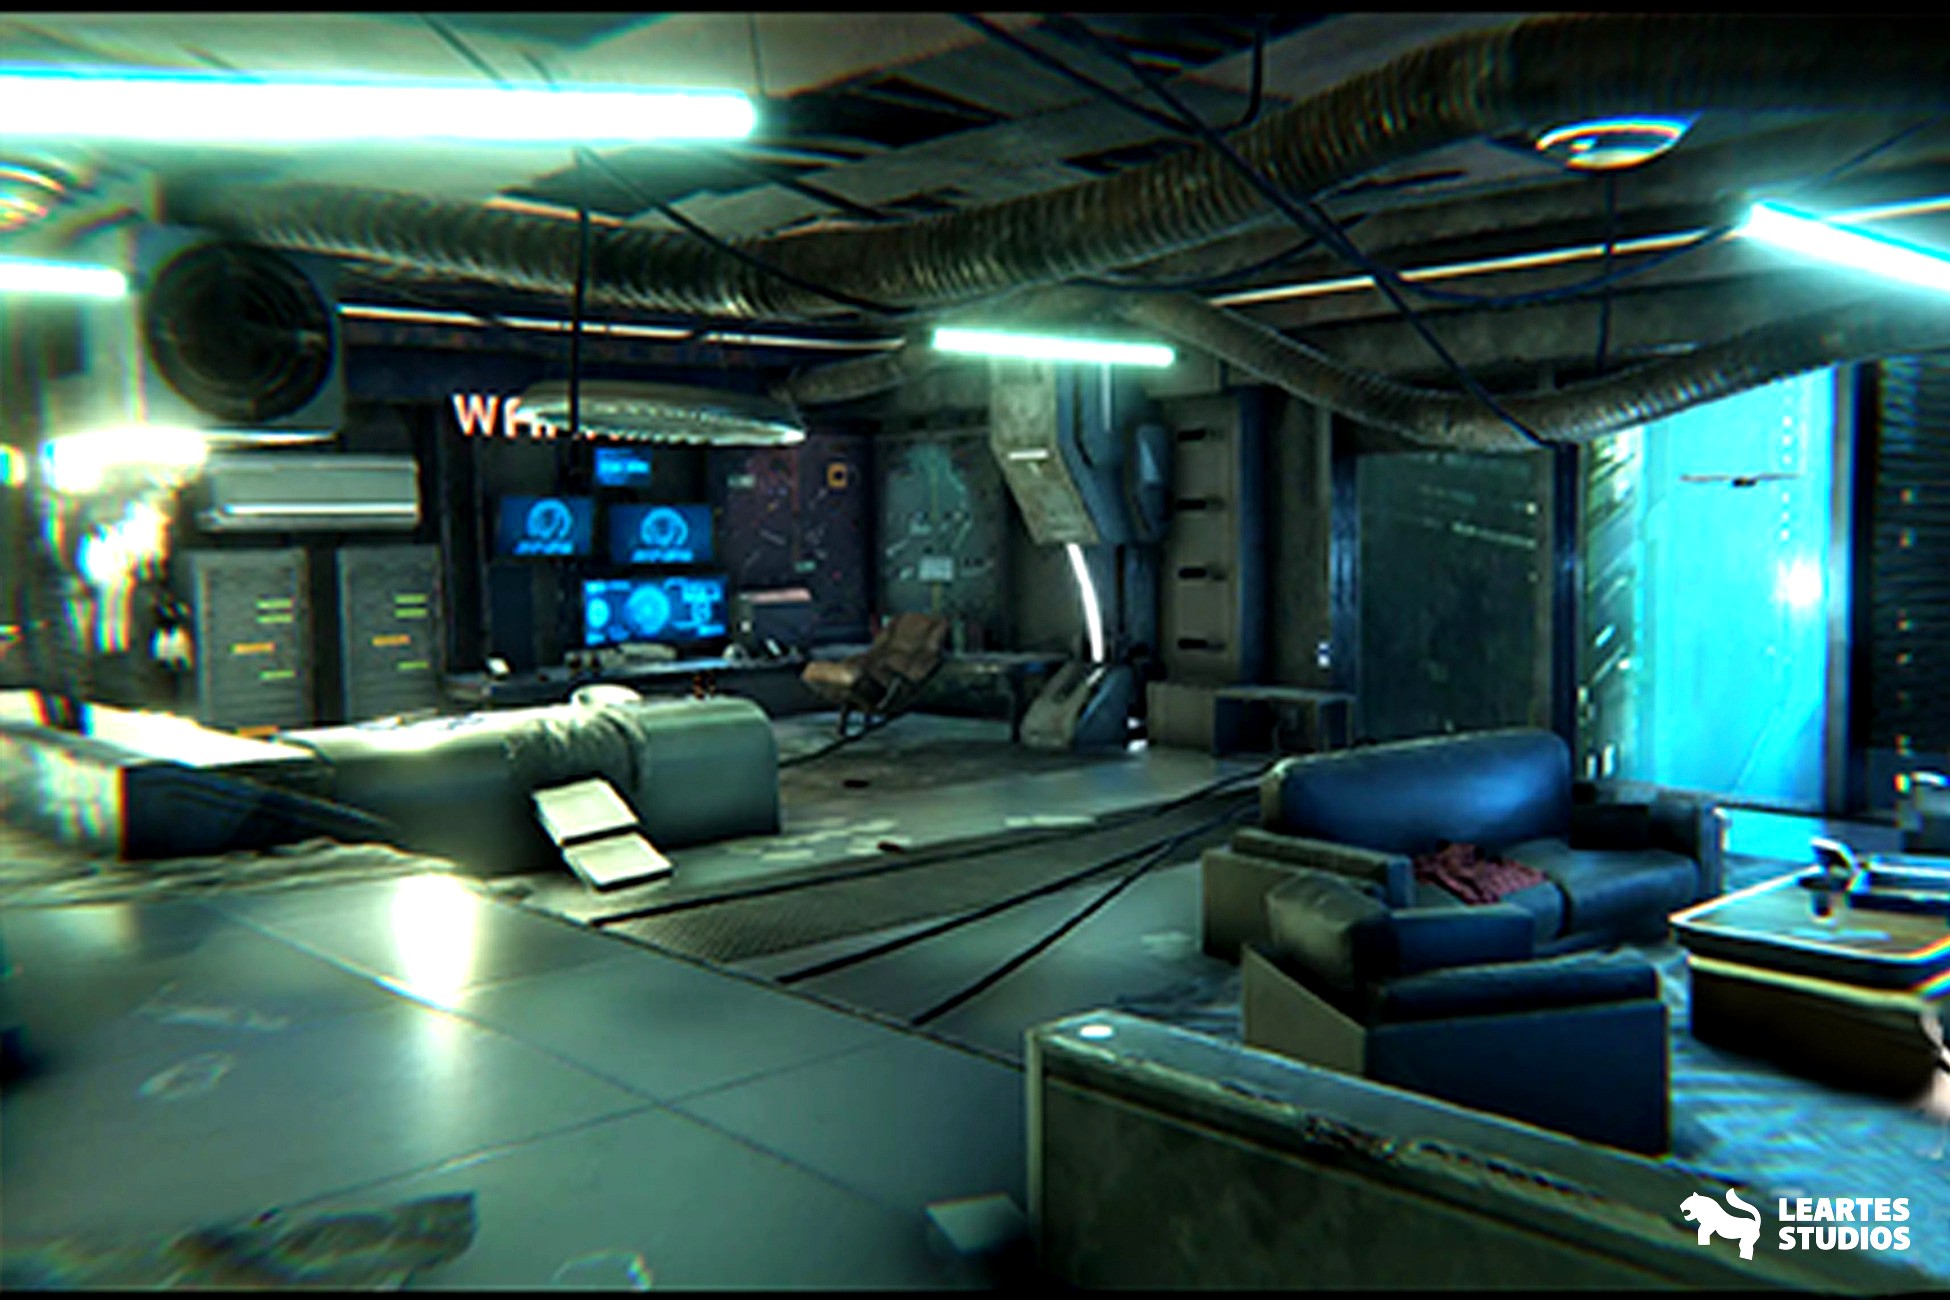 Cyberpunk / Sci-Fi / Futuristic Apartment Interior Environment Kitbash